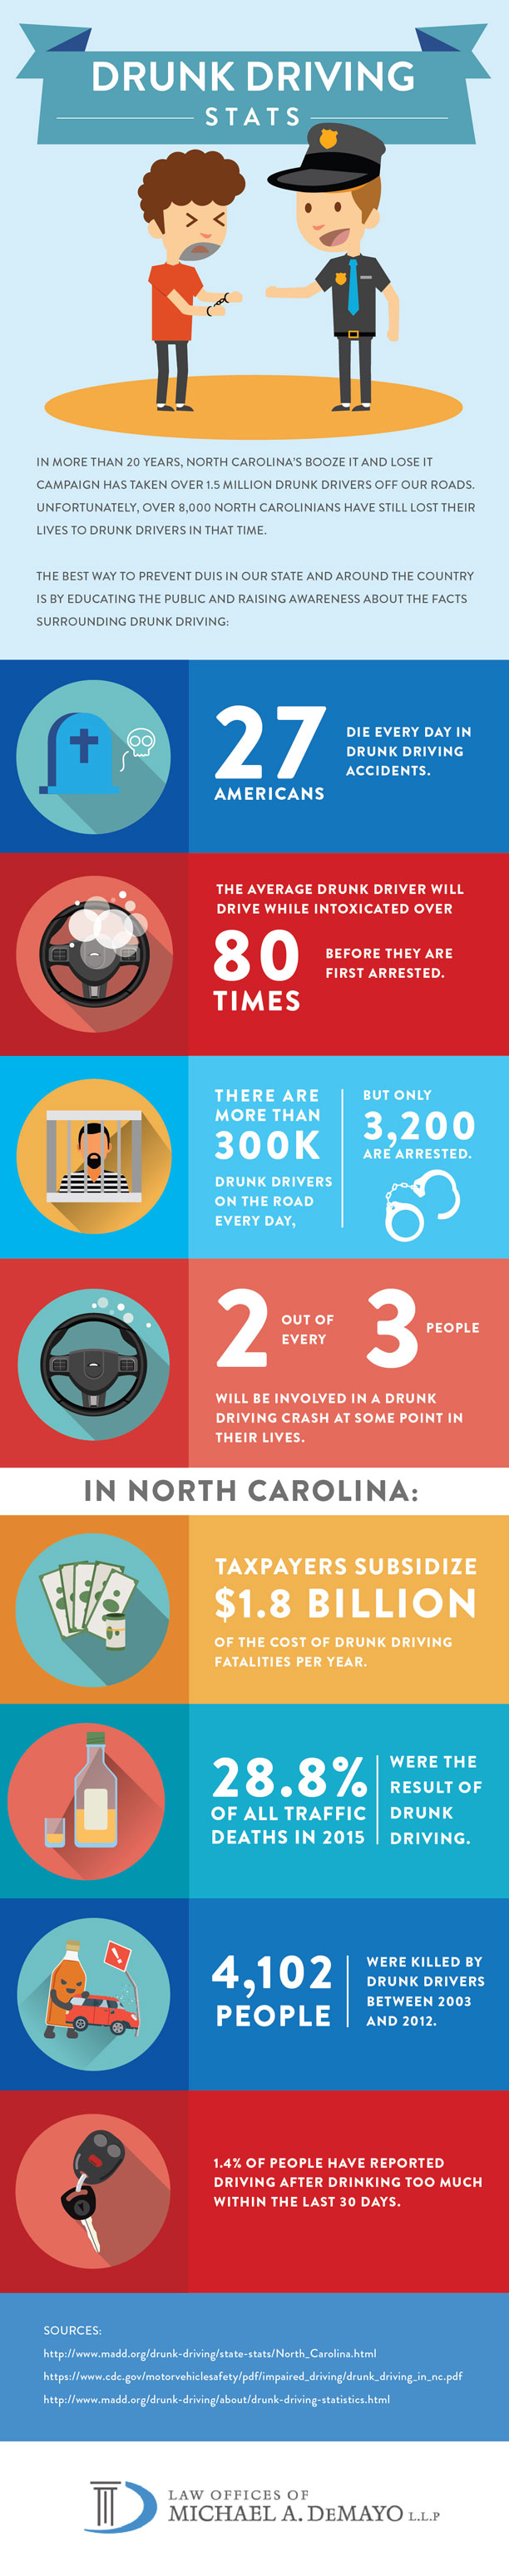 North Carolina drunk driving infographic 